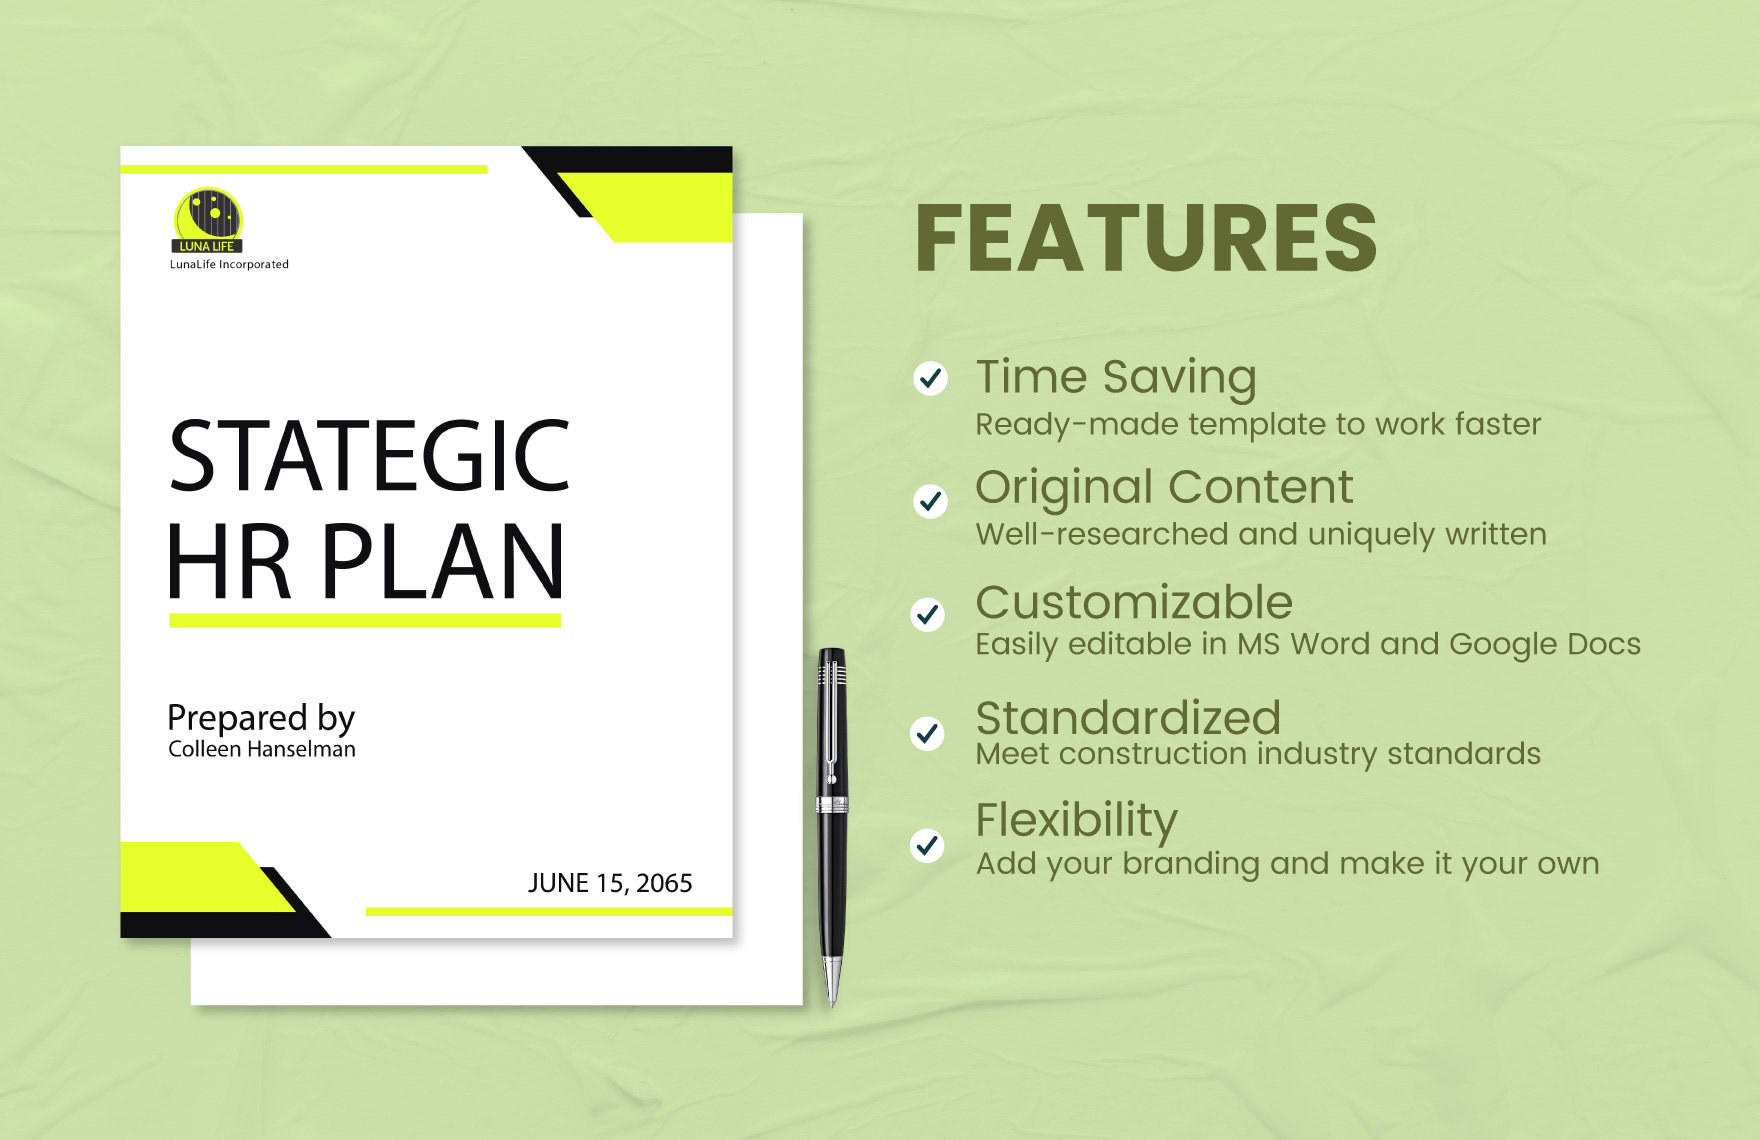 Sample Strategic HR Plan Template